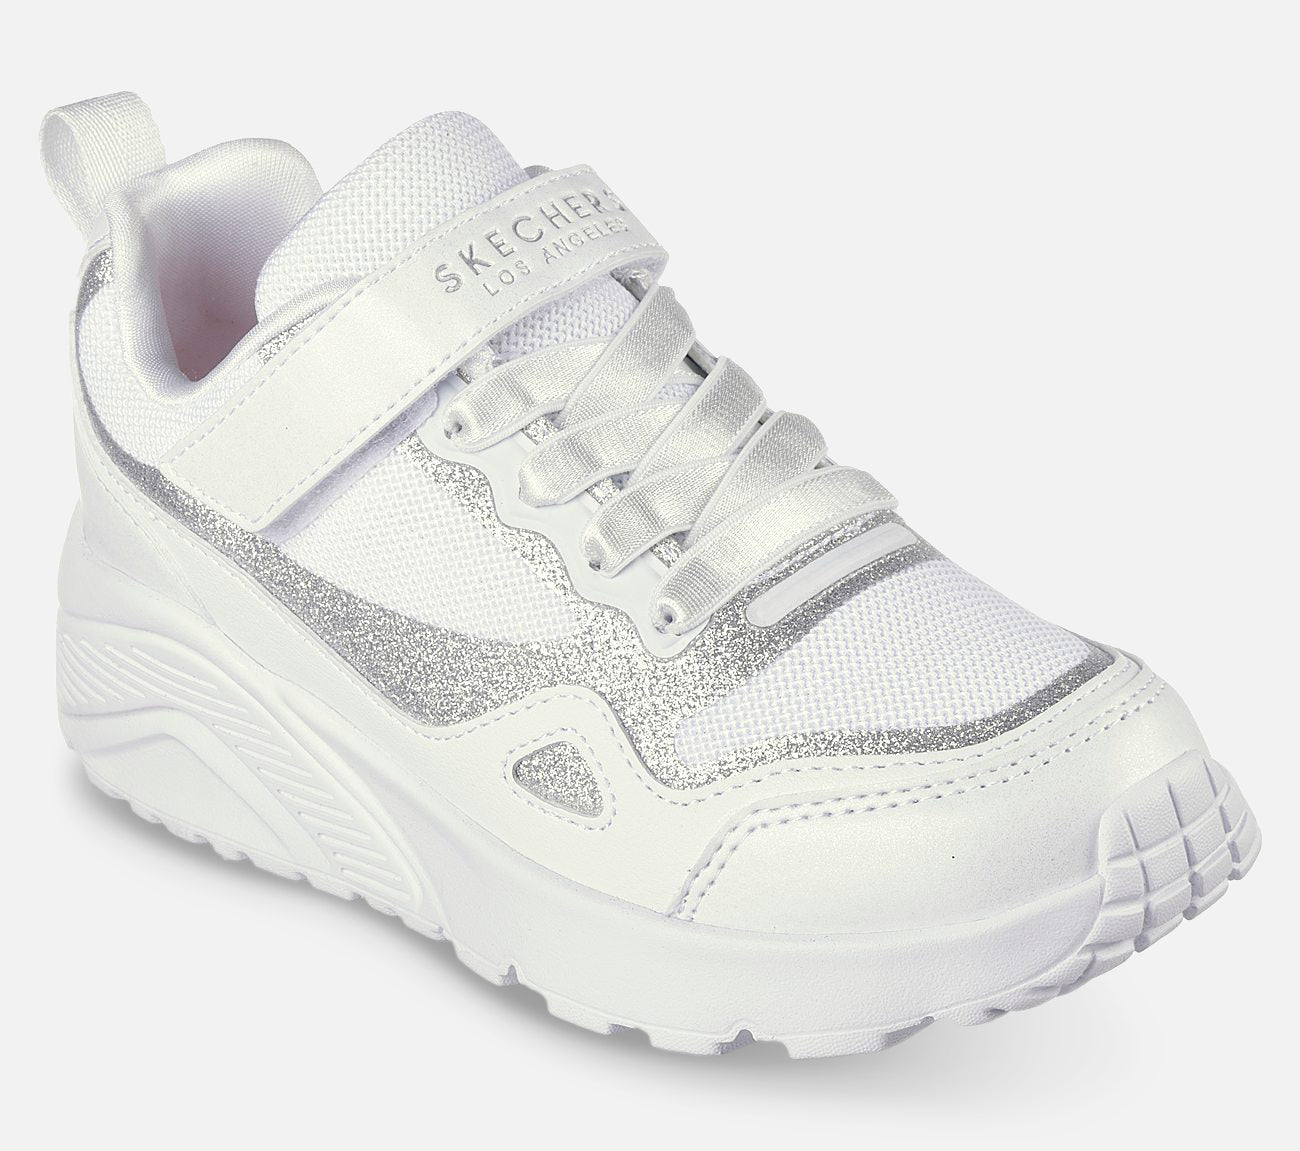 Uno Lite - Glisten Steps Shoe Skechers